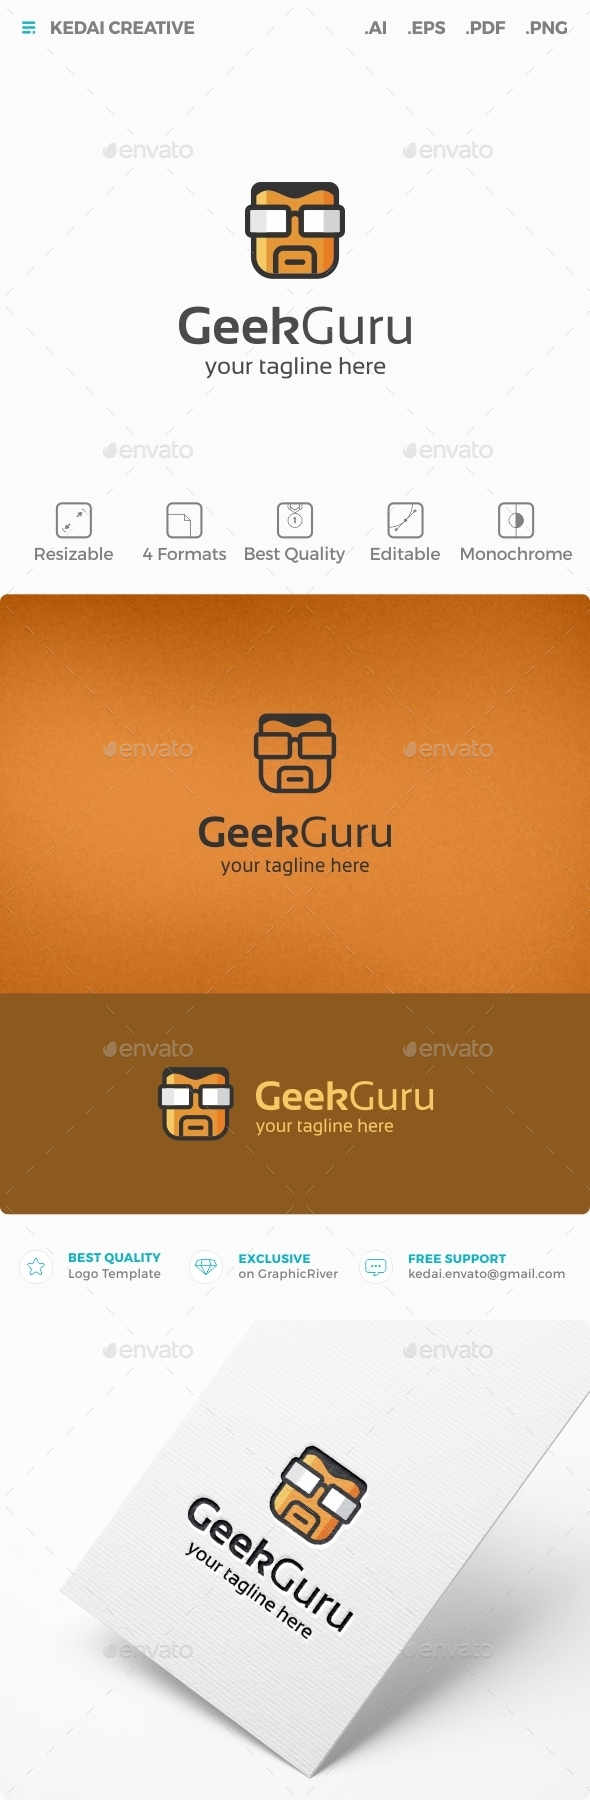 Geek Guru